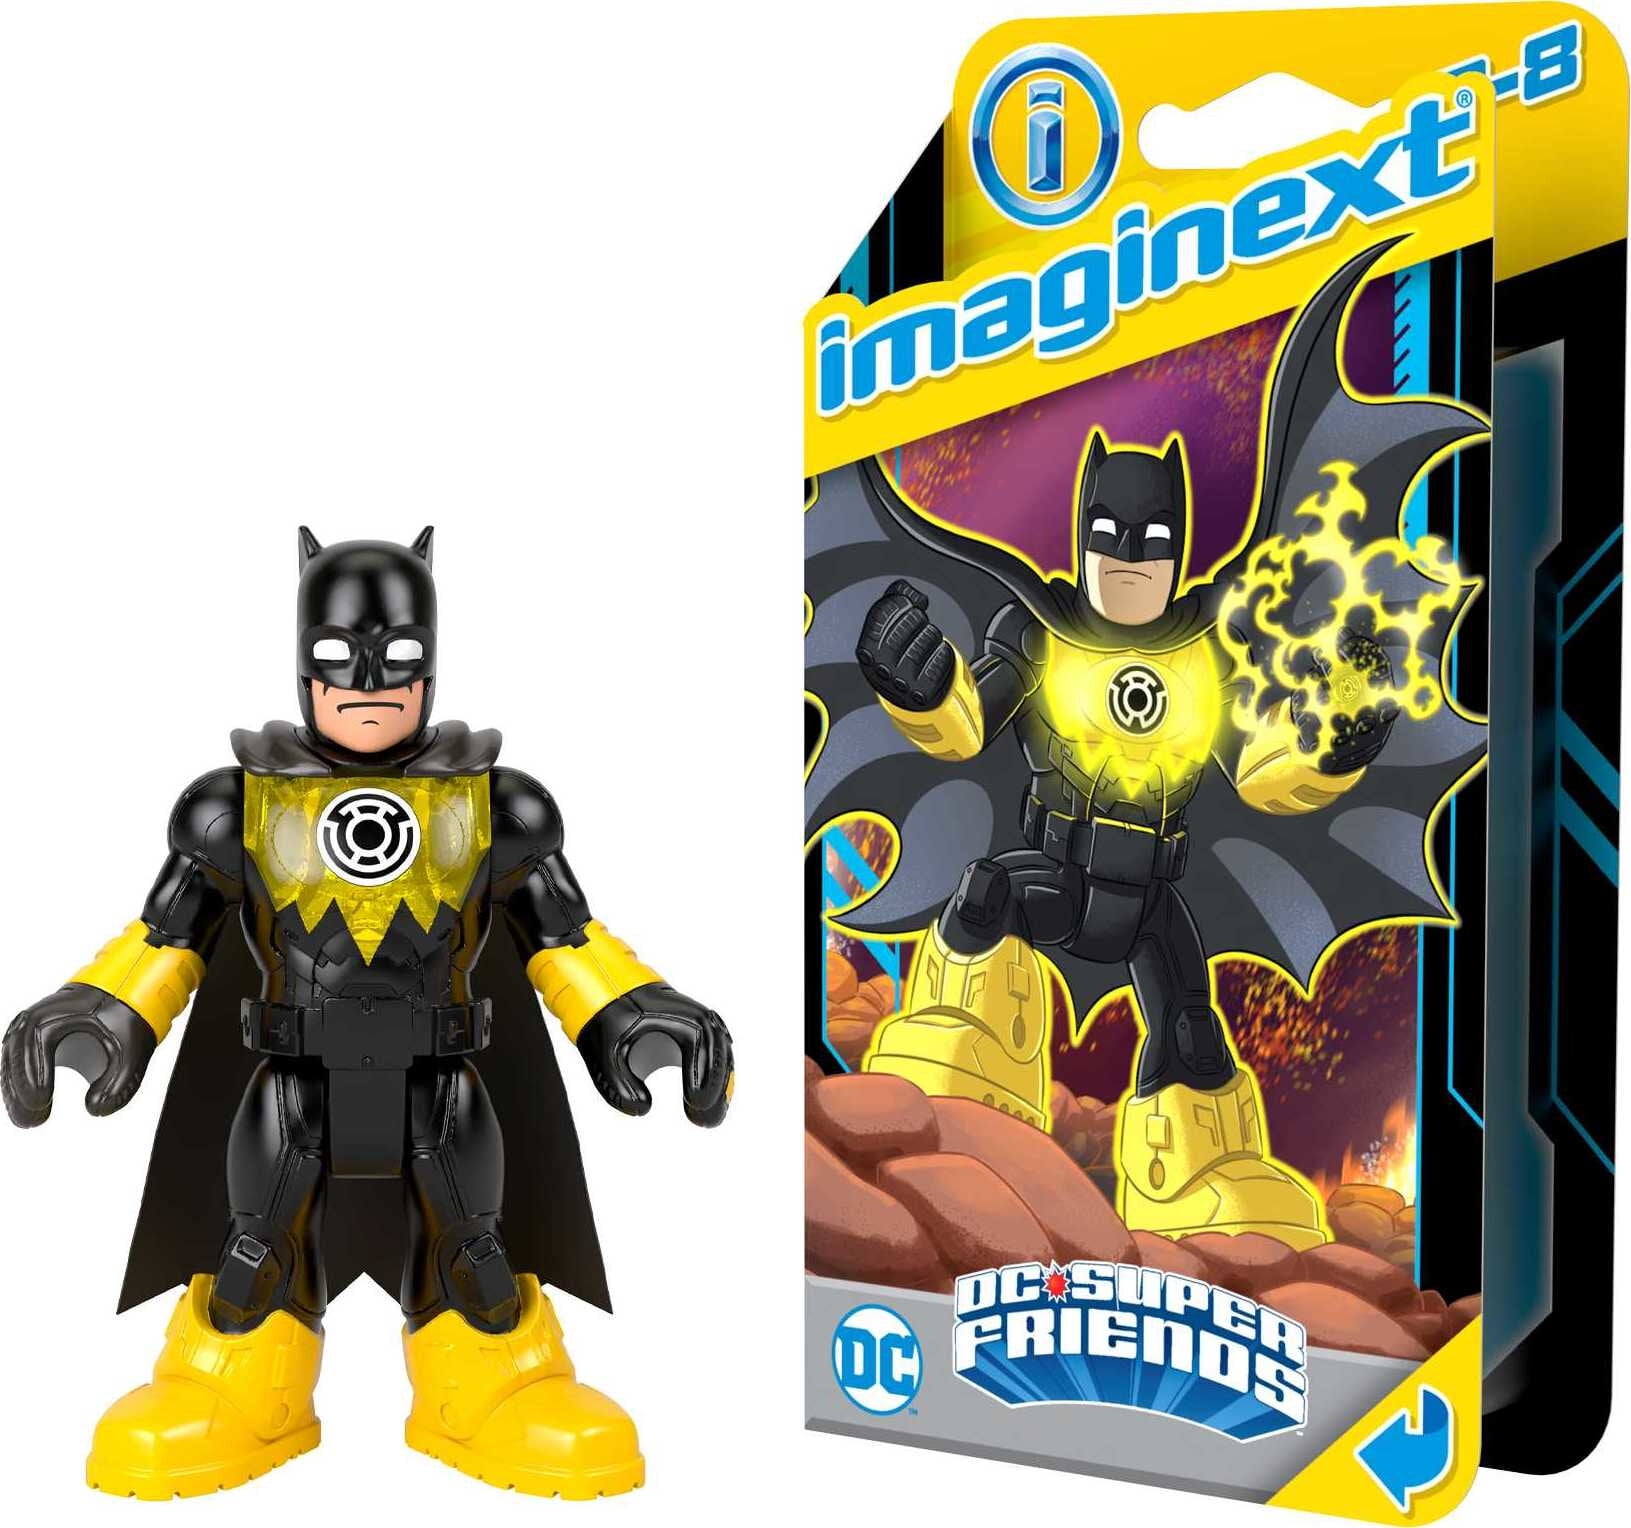 CHOOSE Imaginext DC JUSTICE LEAGUE SUPERFRIENDS FIGURES batman NEW IN PACKAGE